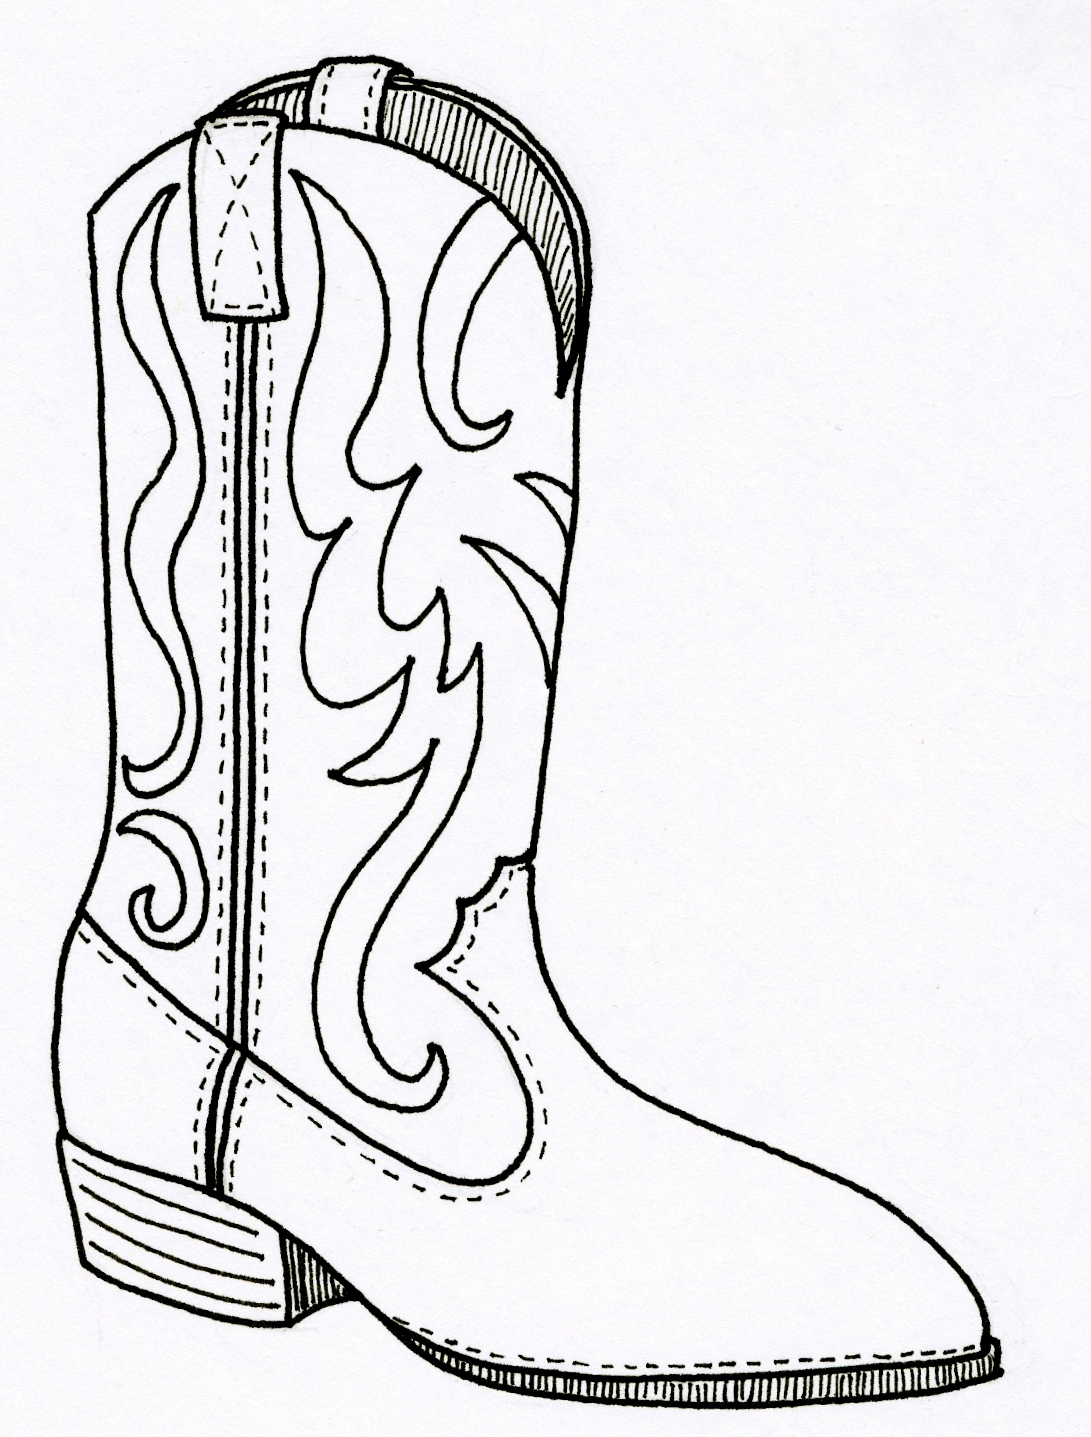 Cowboy boots coloring pages - Coloring Pages  Pictures - IMAGIXS